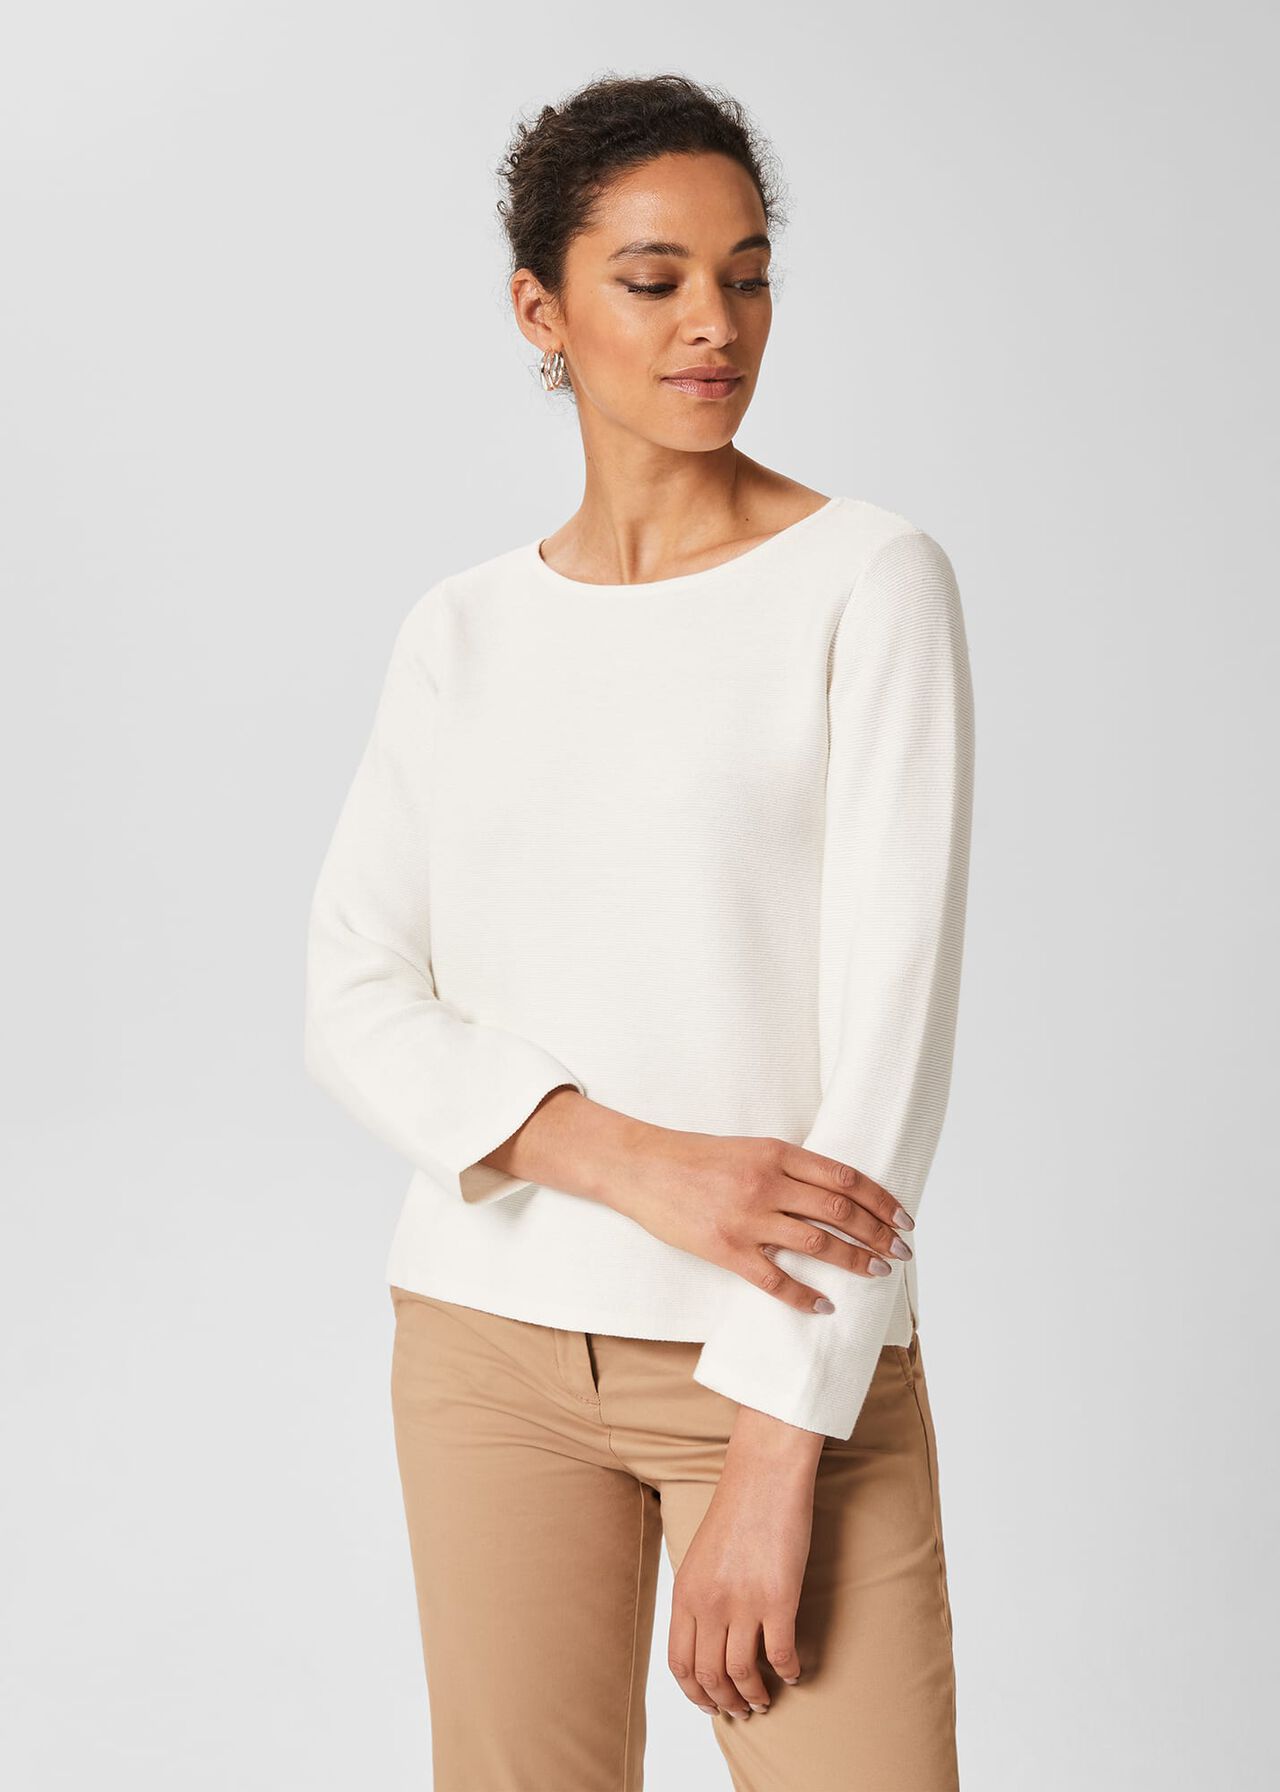 Beatrice Cotton Sweater, Ivory, hi-res